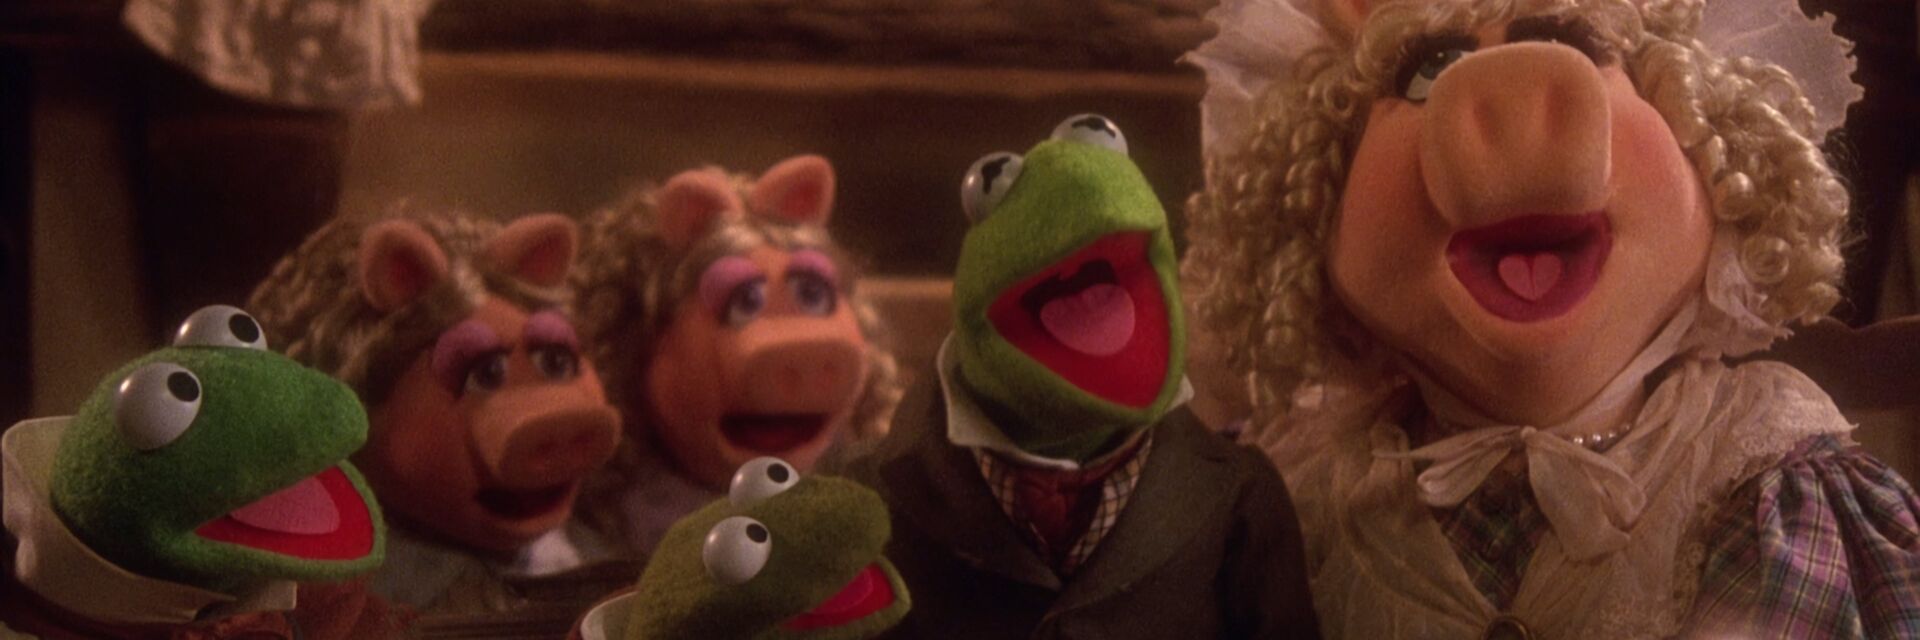 The Muppet Christmas Carol (1992) – 30th anniversary